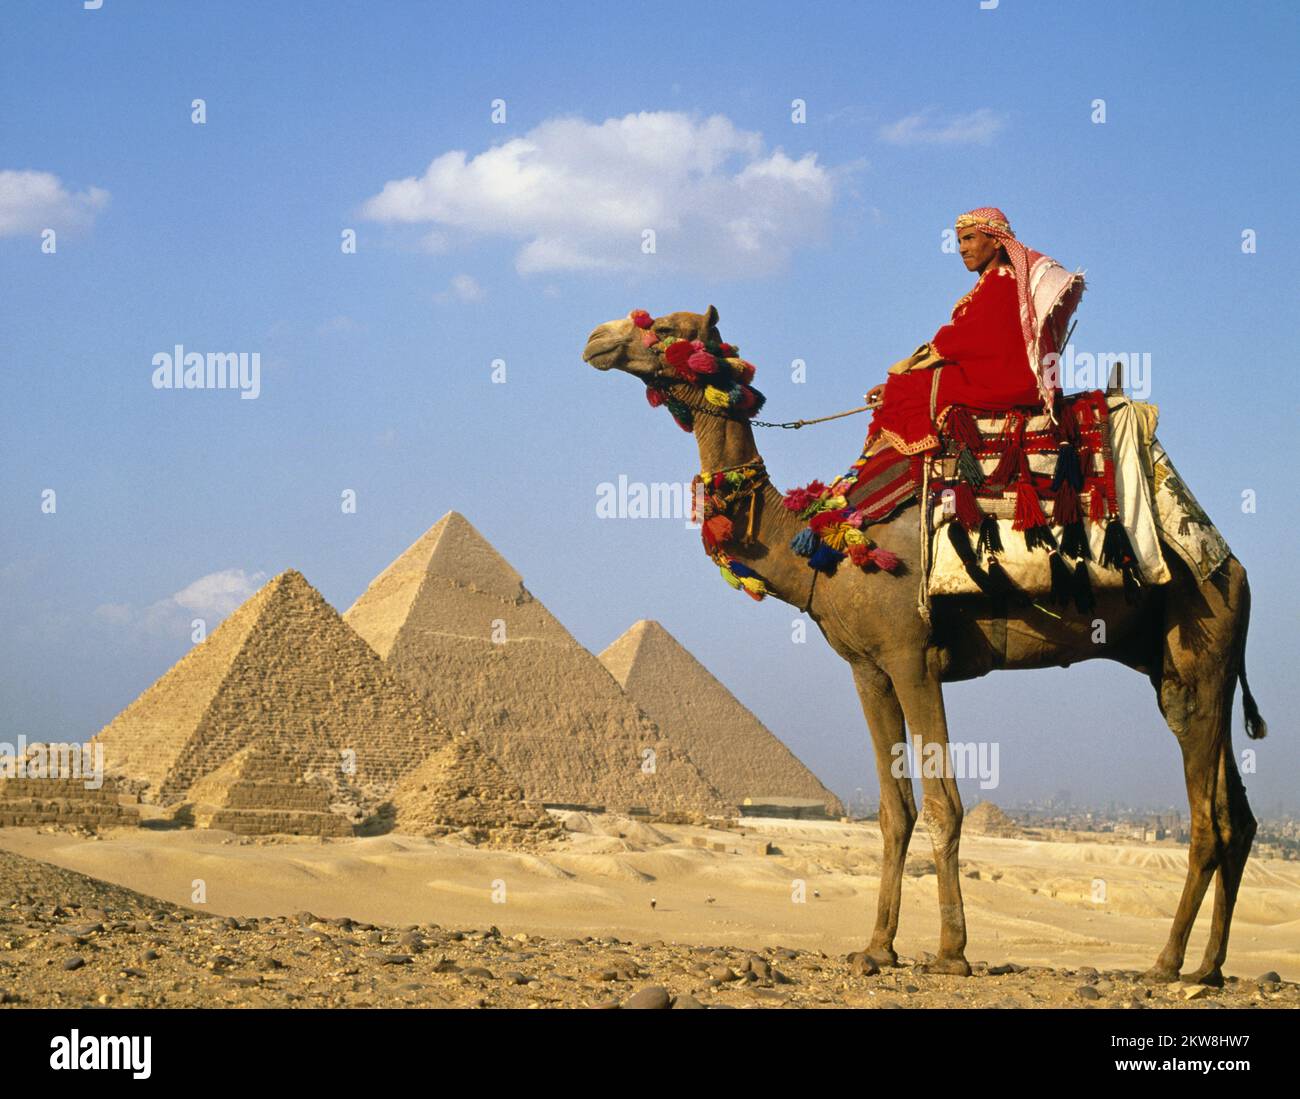 Camel and Pyramids, Egypt, Giza, Cairo Stock Photo